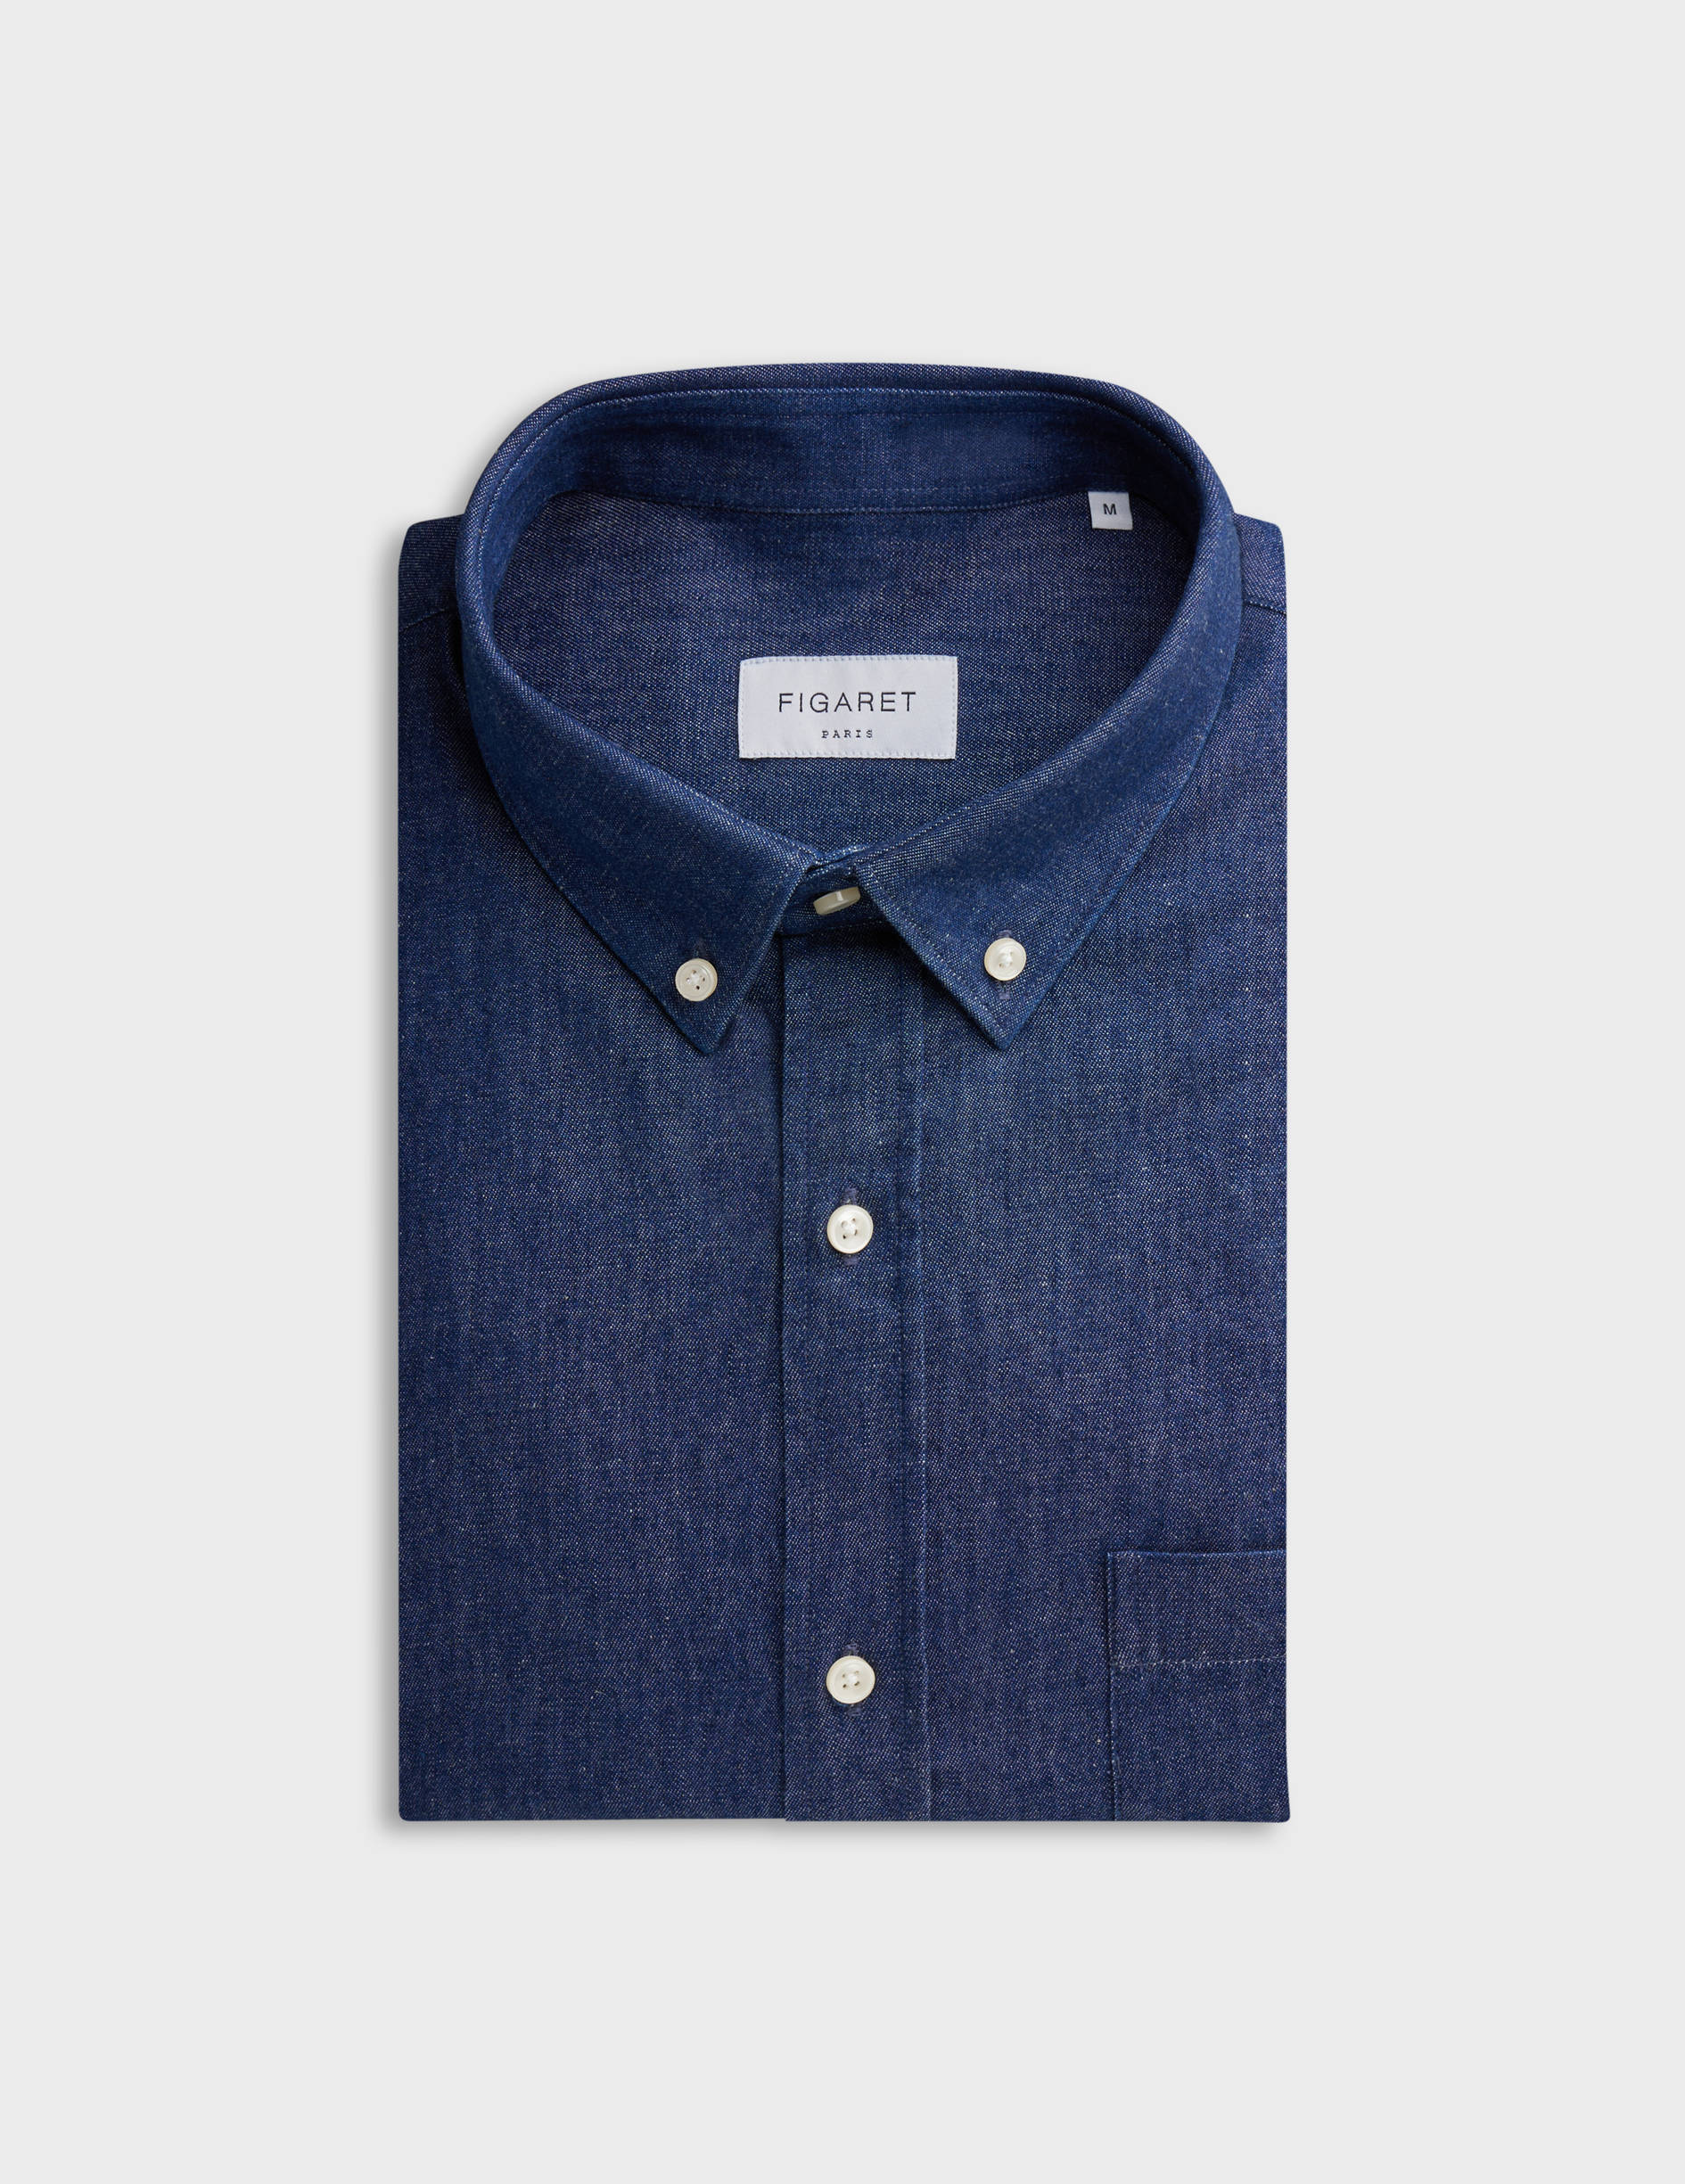 Gabriel shirt in navy denim - Denim - American Collar